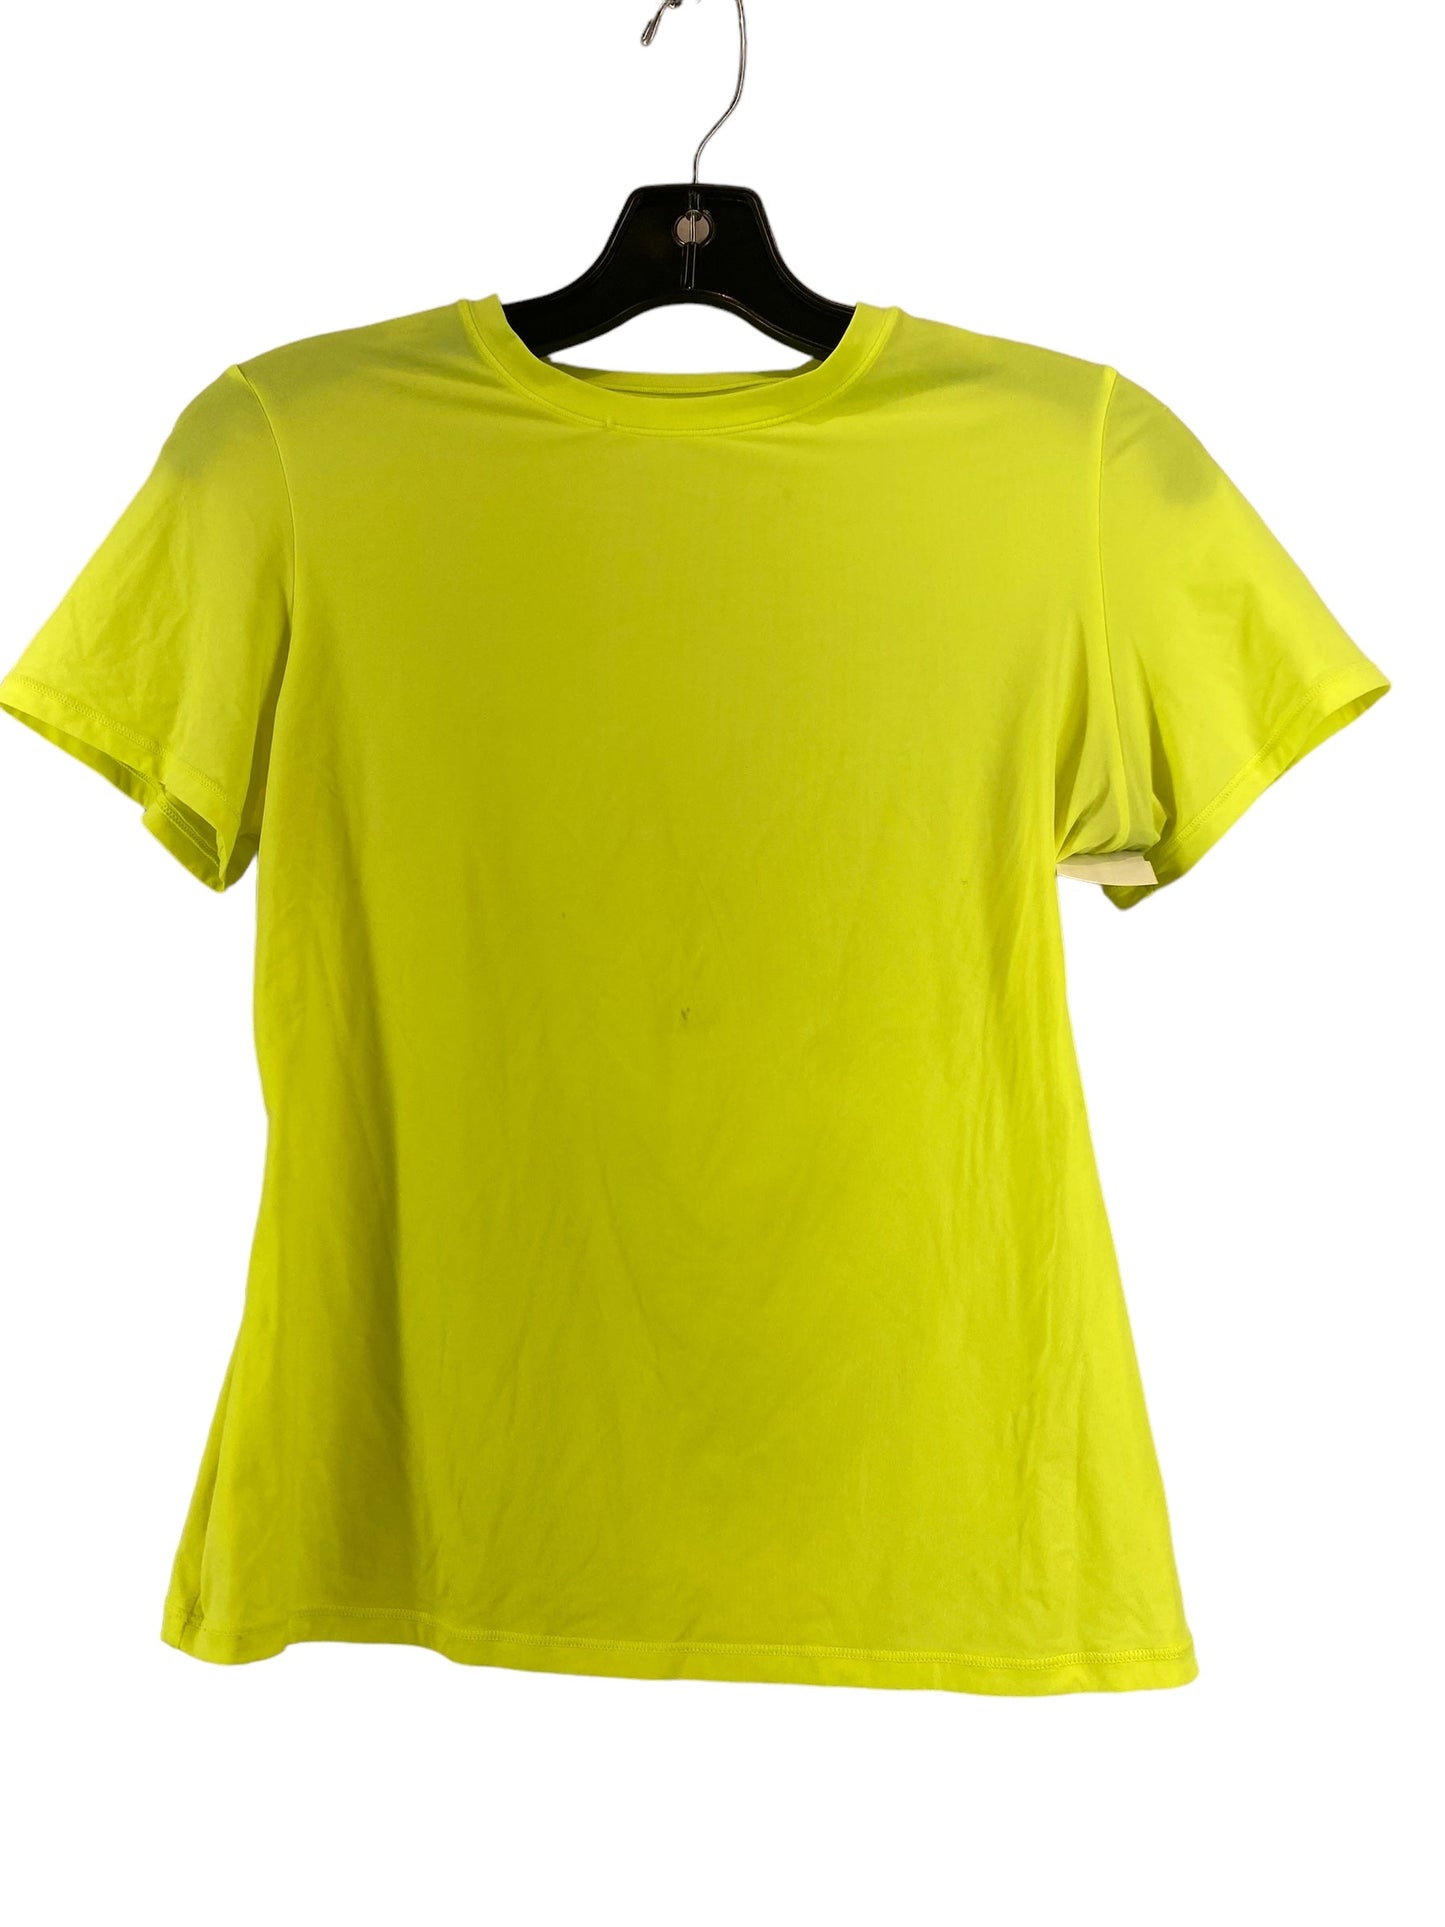 Yellow Top Short Sleeve Skims, Size M